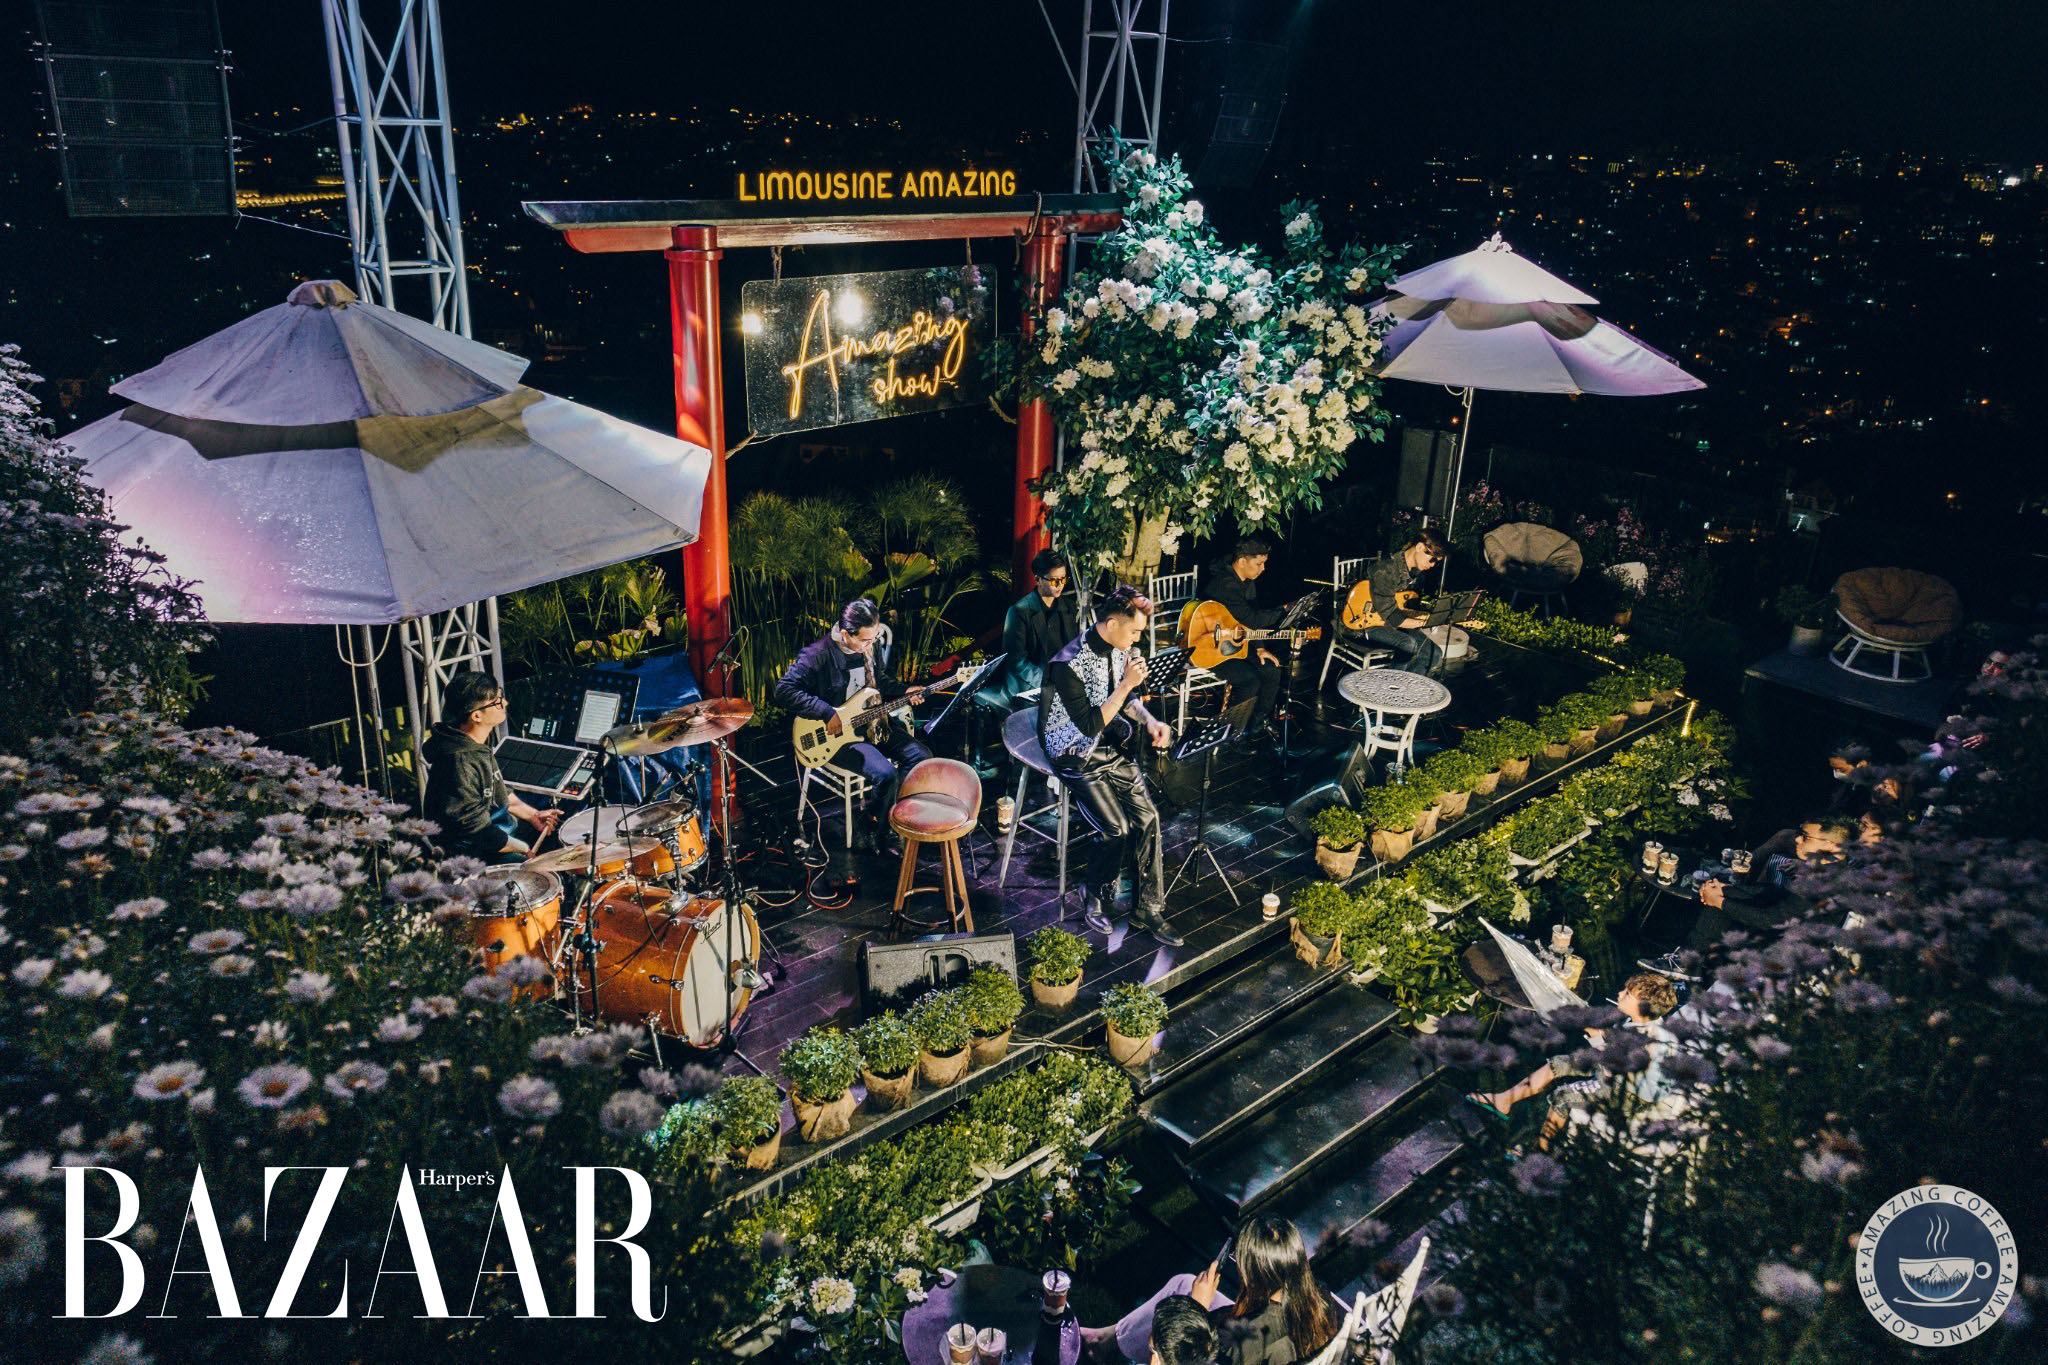 Harper's Bazaar_sân khấu ca nhạc tại Đà Lạt_03